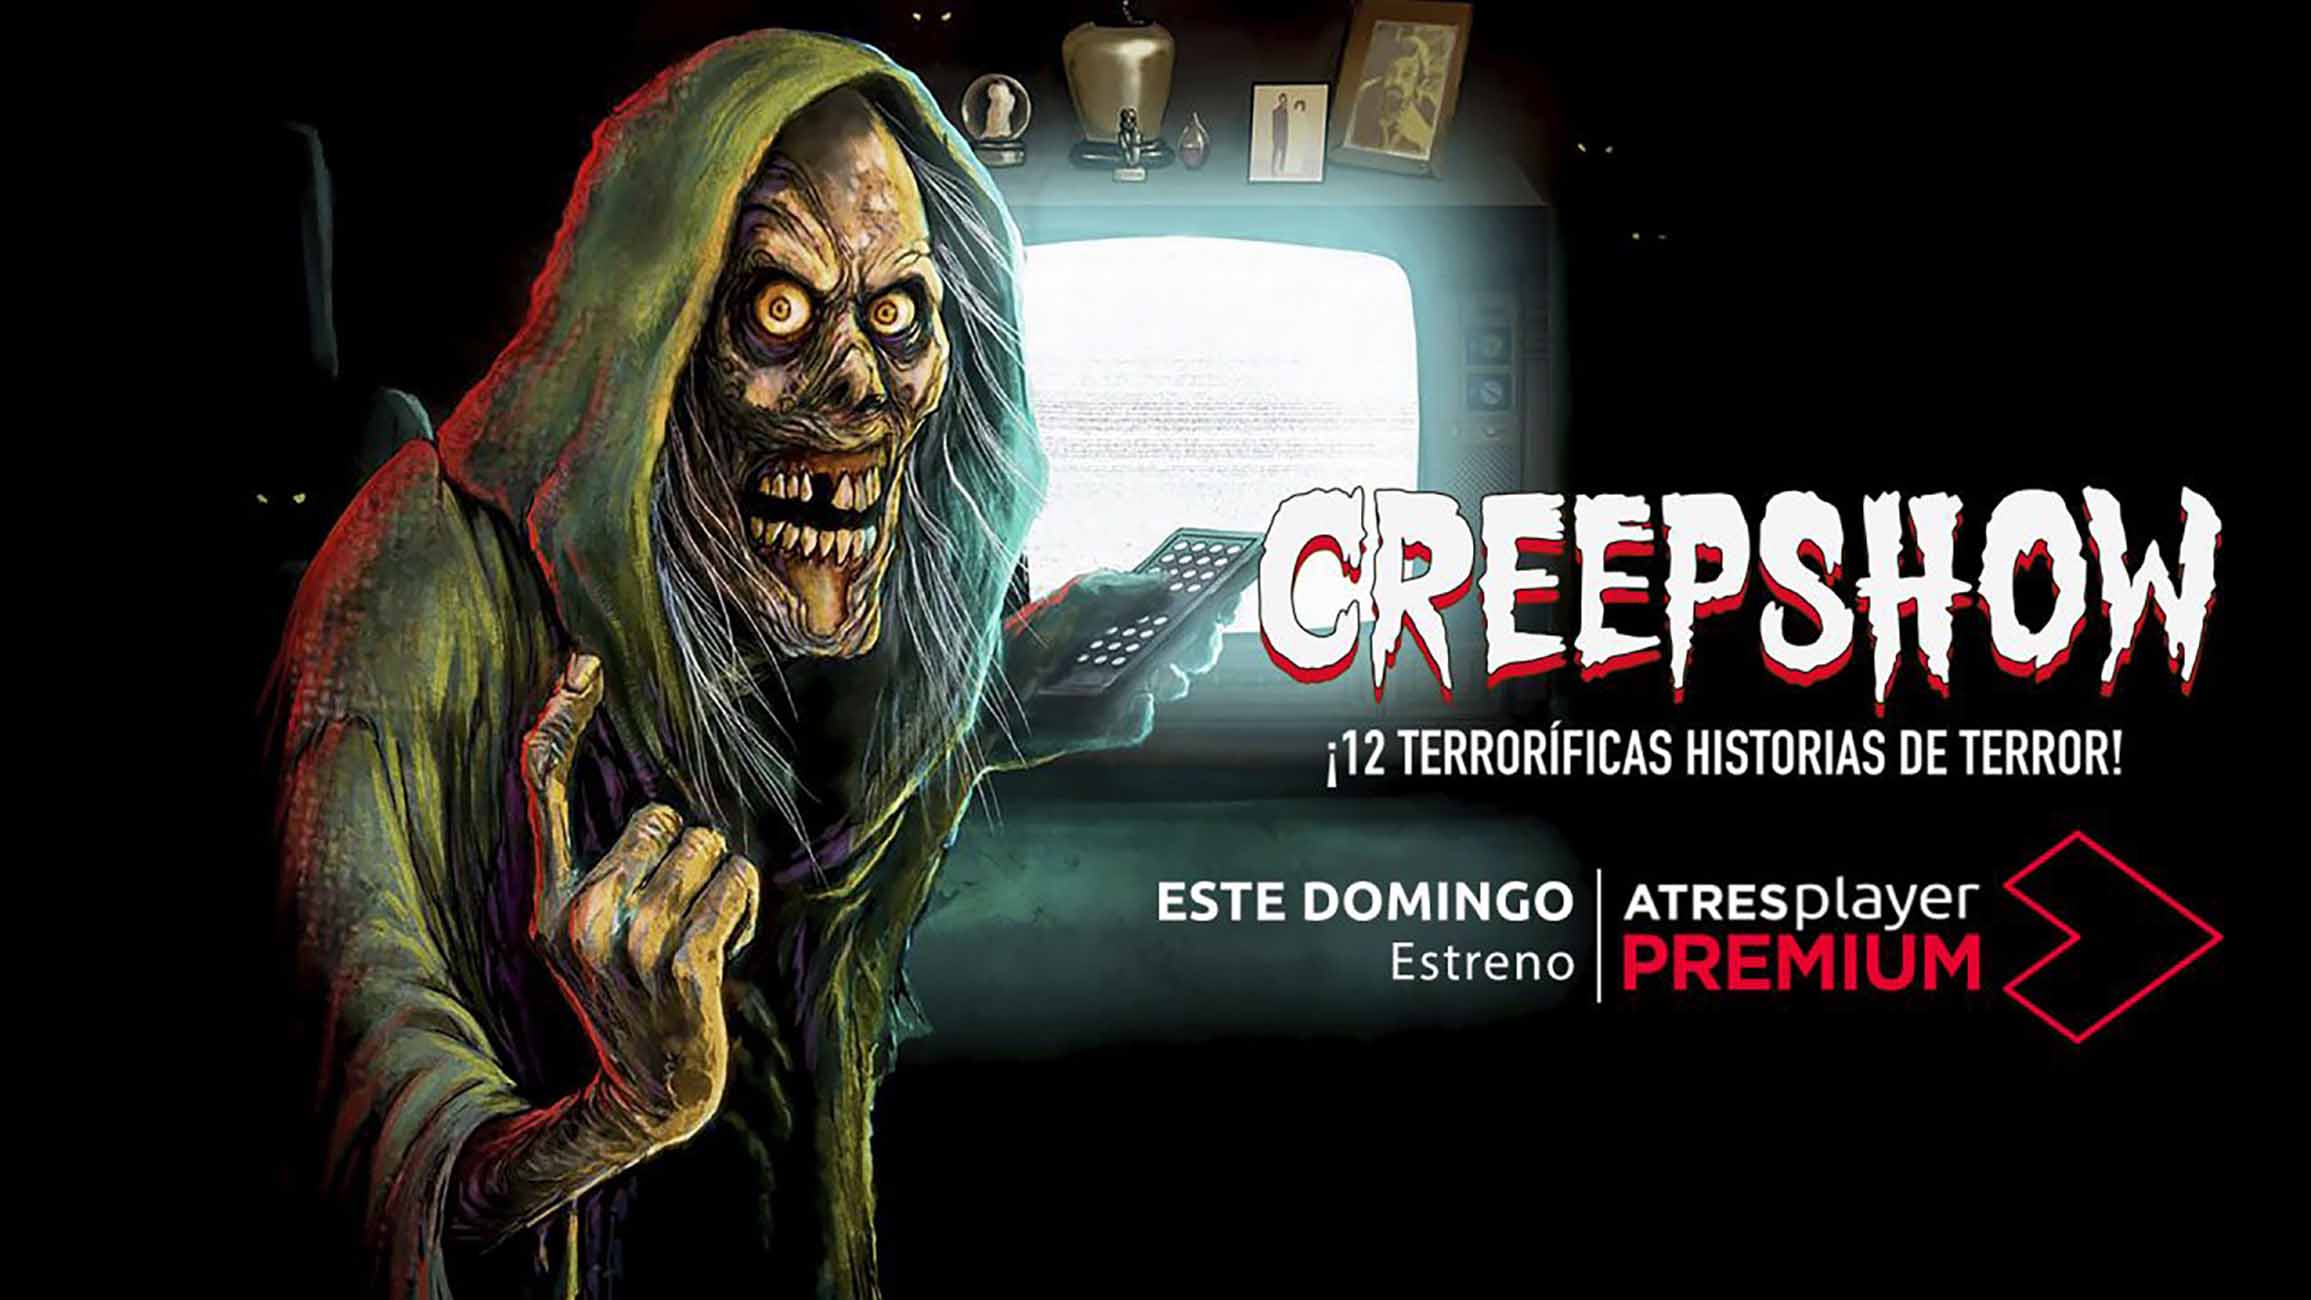 Creepshow vuelve este domingo en Atresplayer